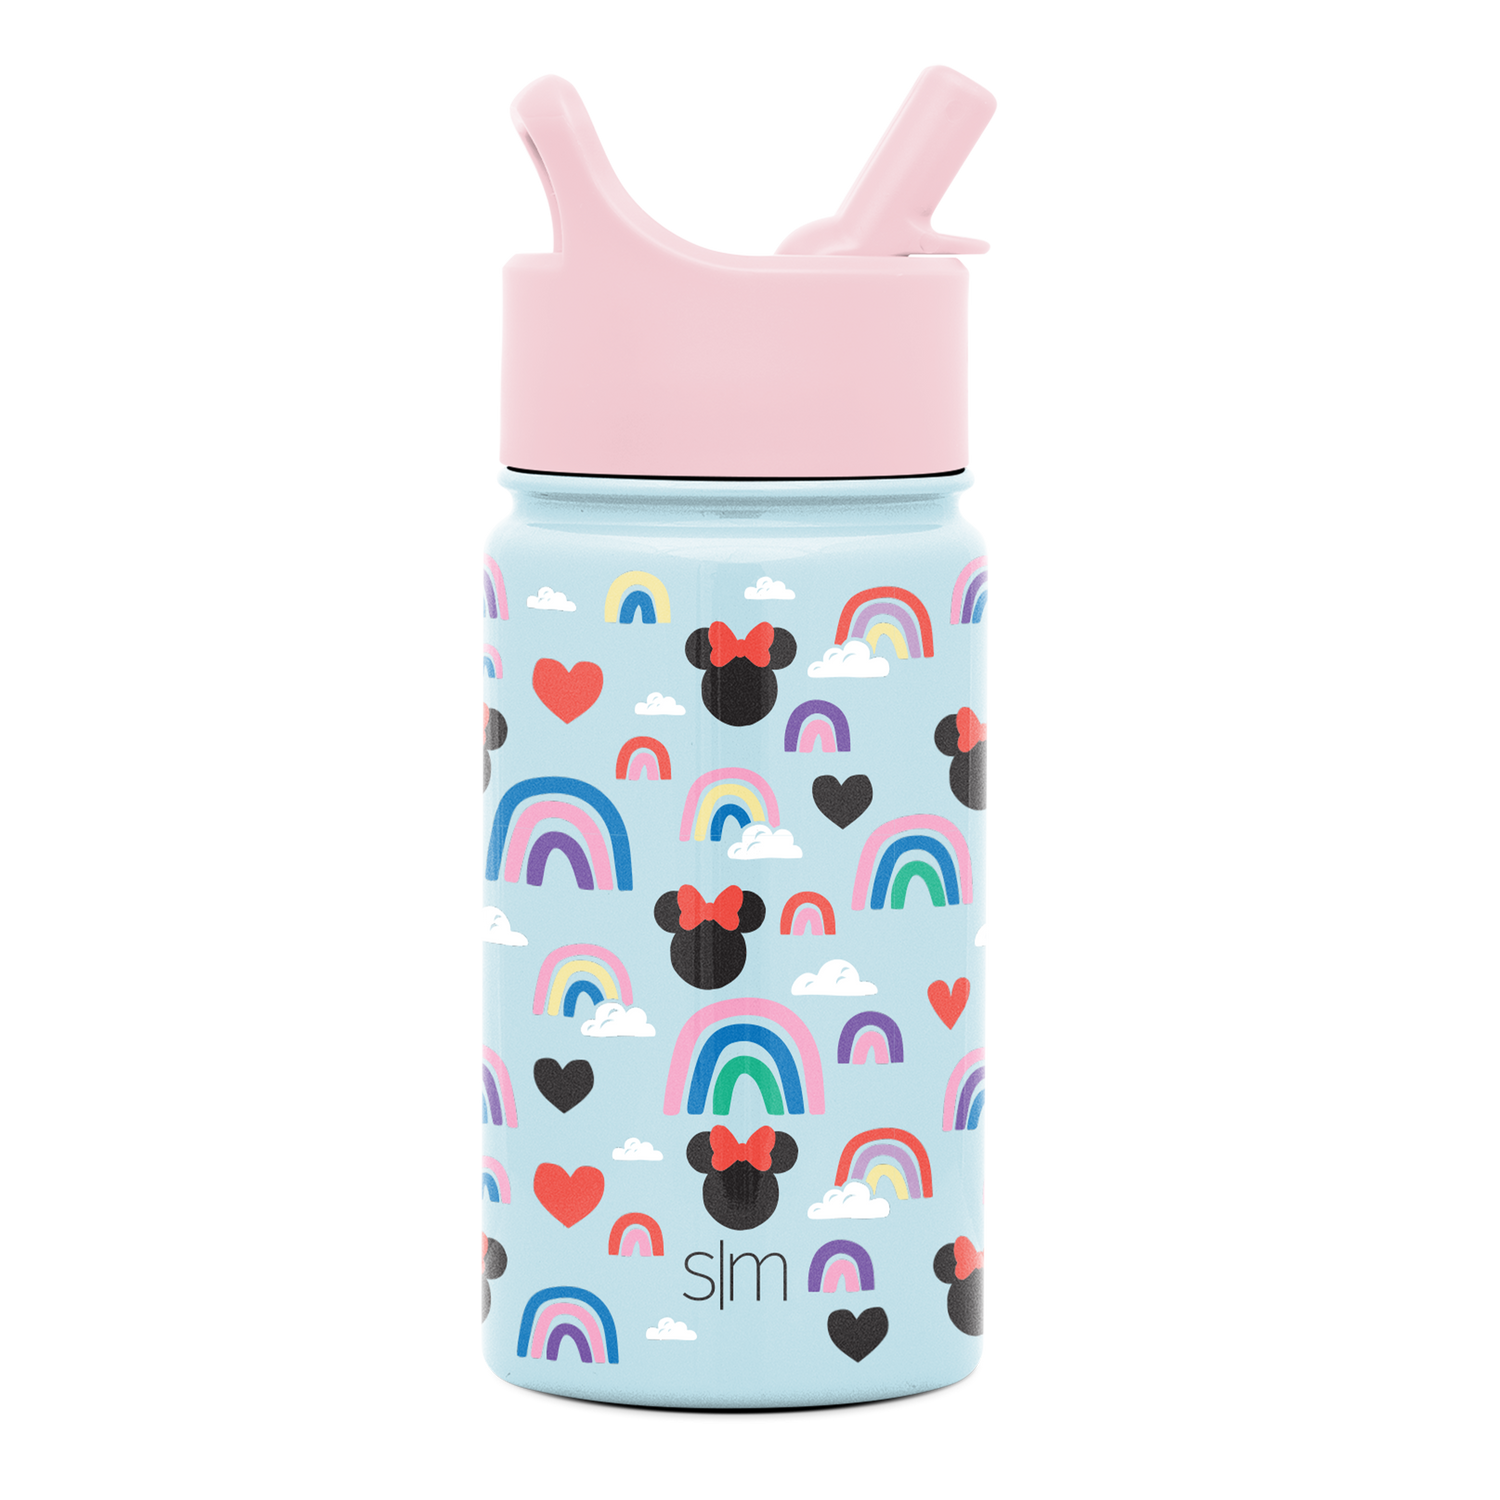 Simple Modern 14oz Disney Summit Kids Water Bottle with Straw Lid